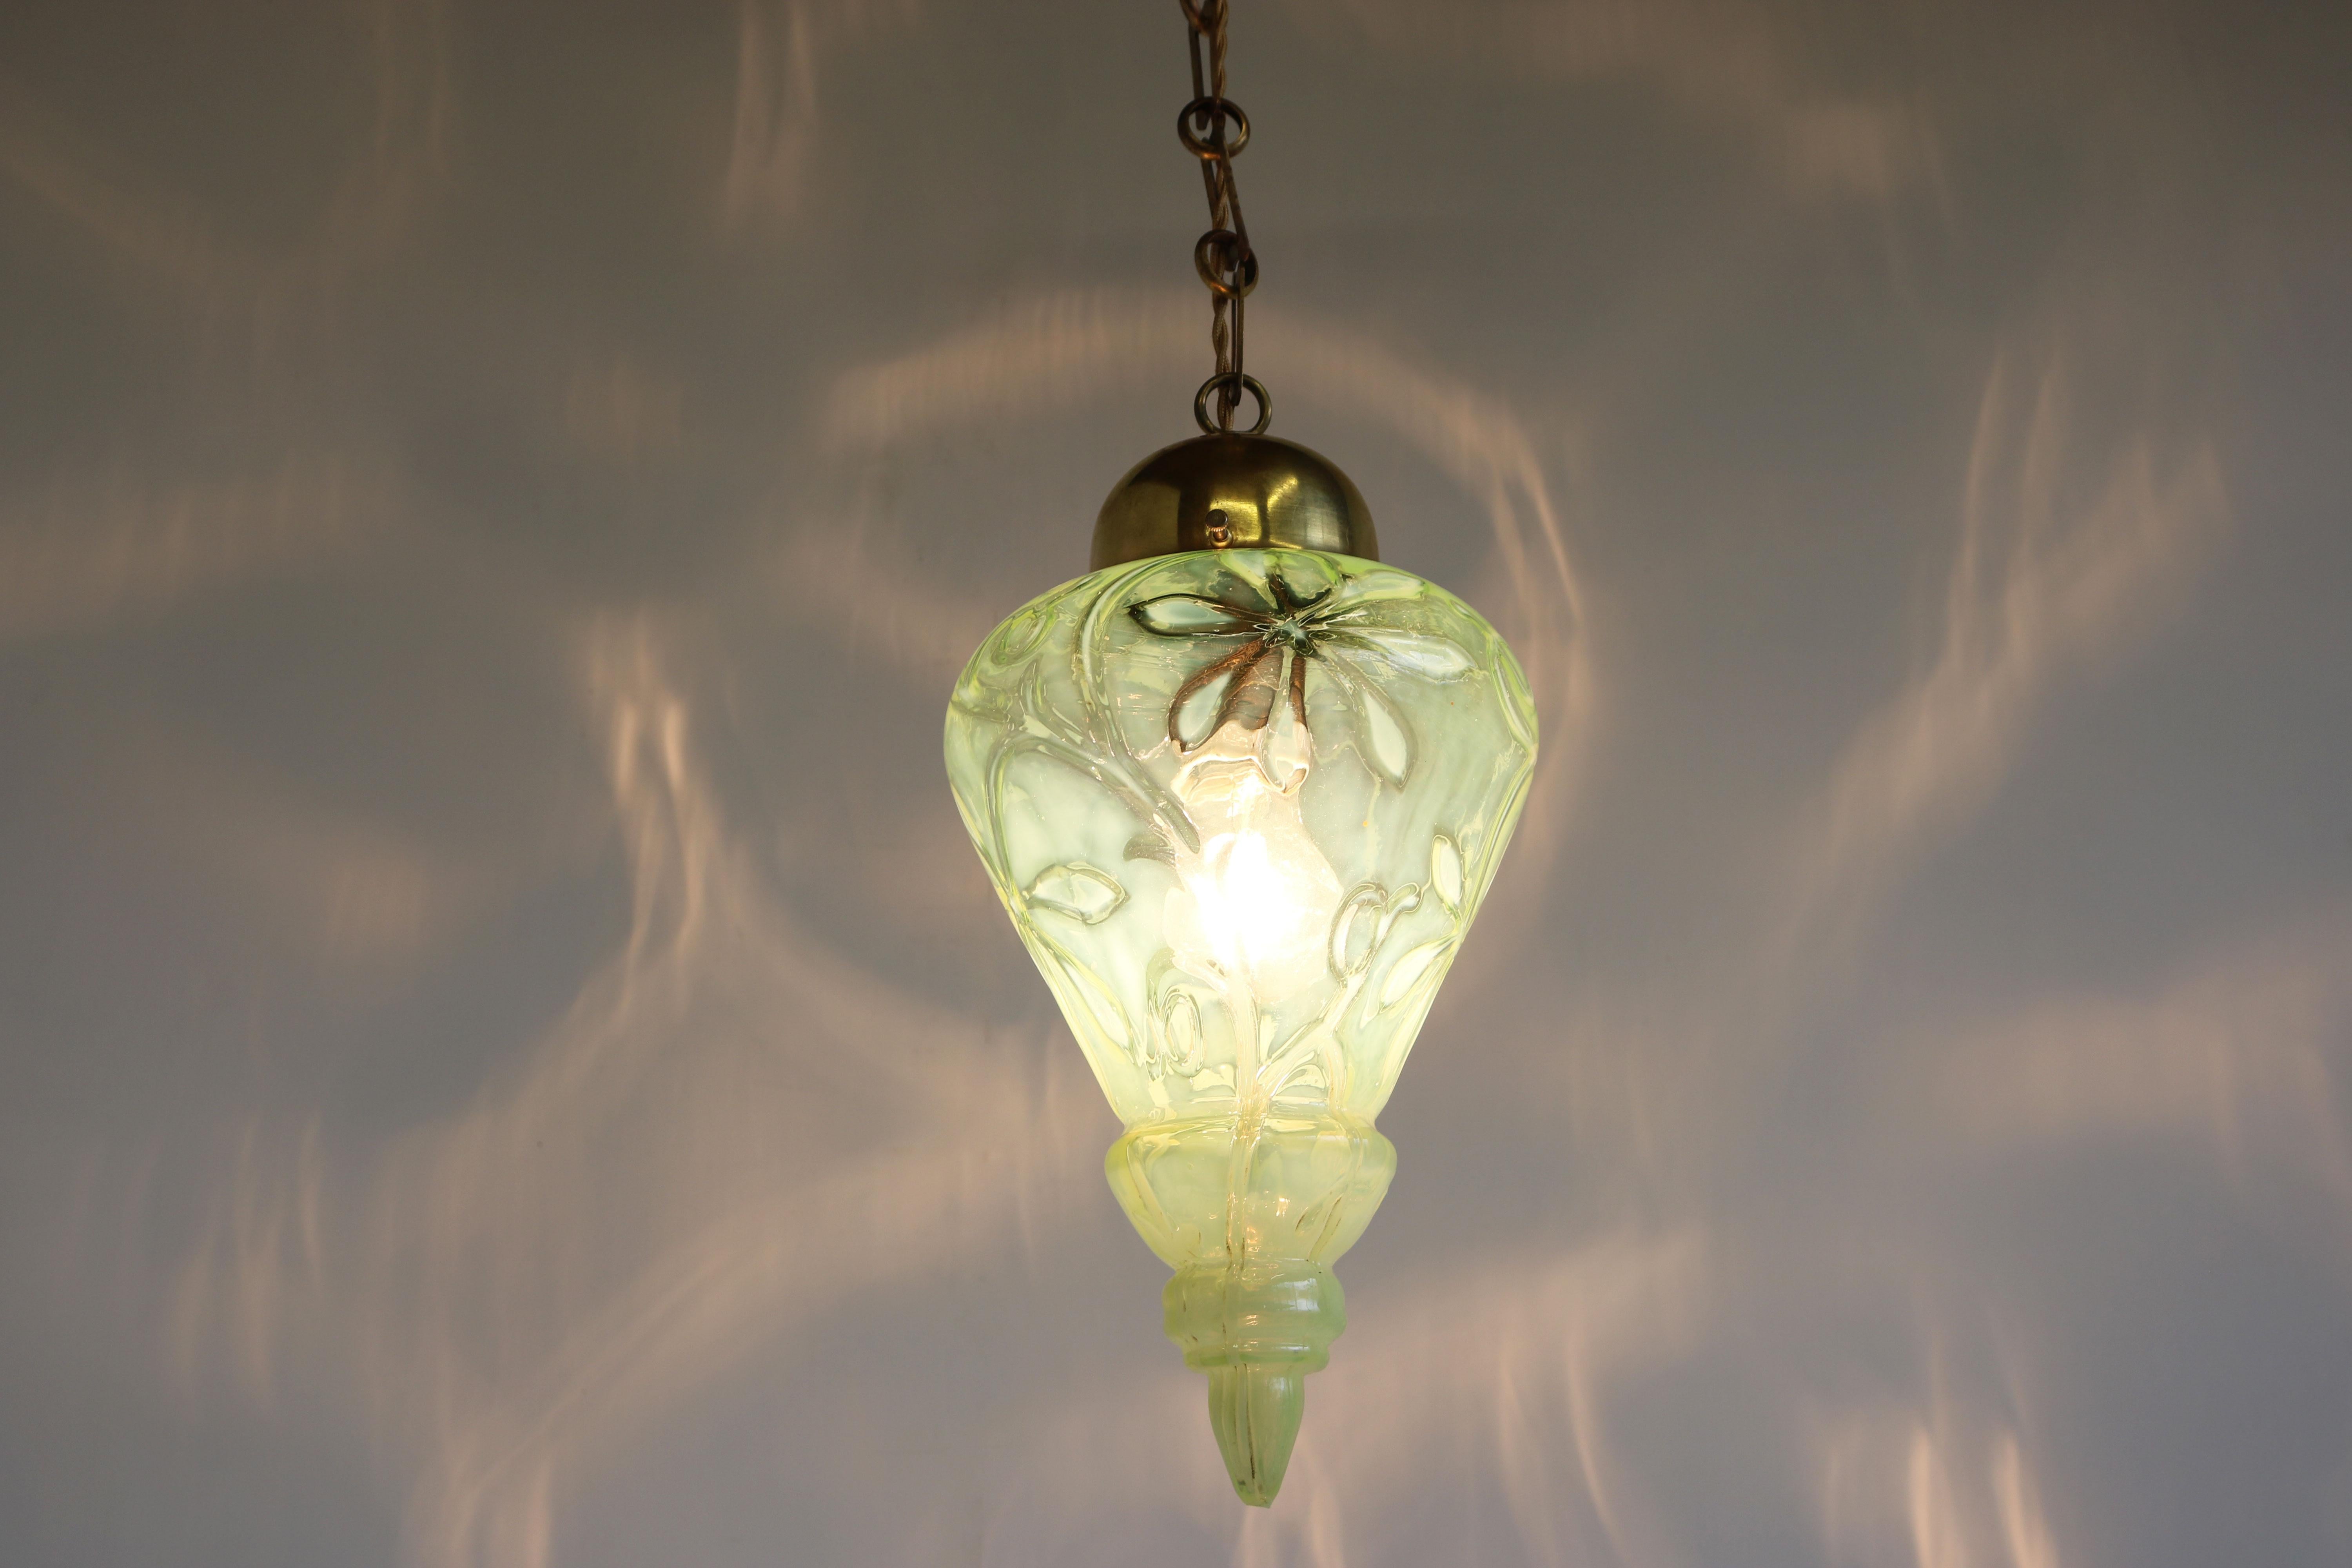 Arts & Crafts Pendant Light by Henry G. Richardson & Sons 1900 Vaseline Glass In Good Condition For Sale In Ijzendijke, NL